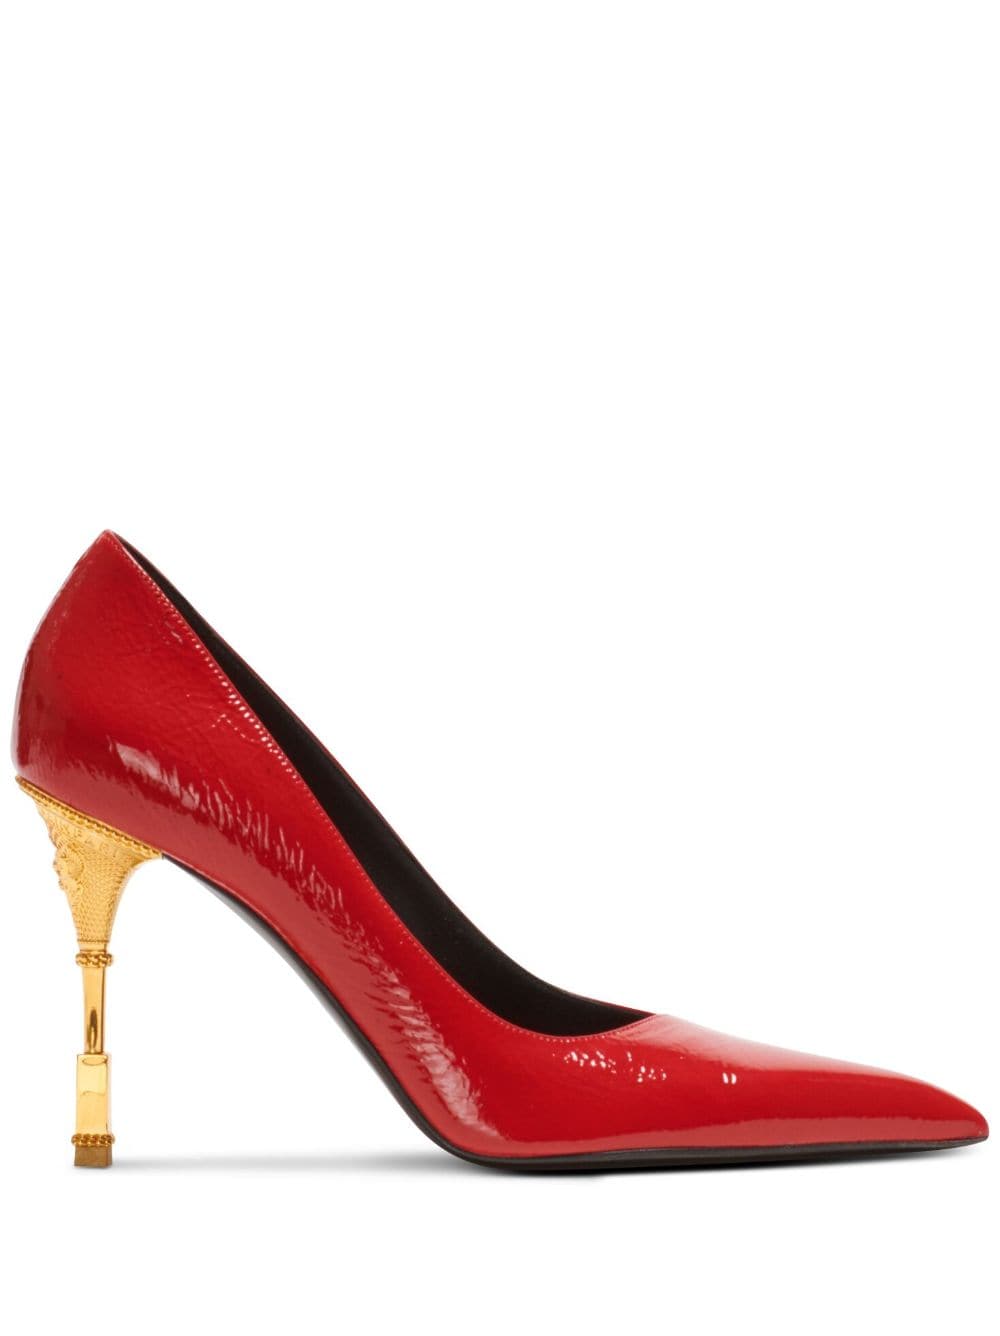 Balmain Patent Moneta Sandals 95 In Red